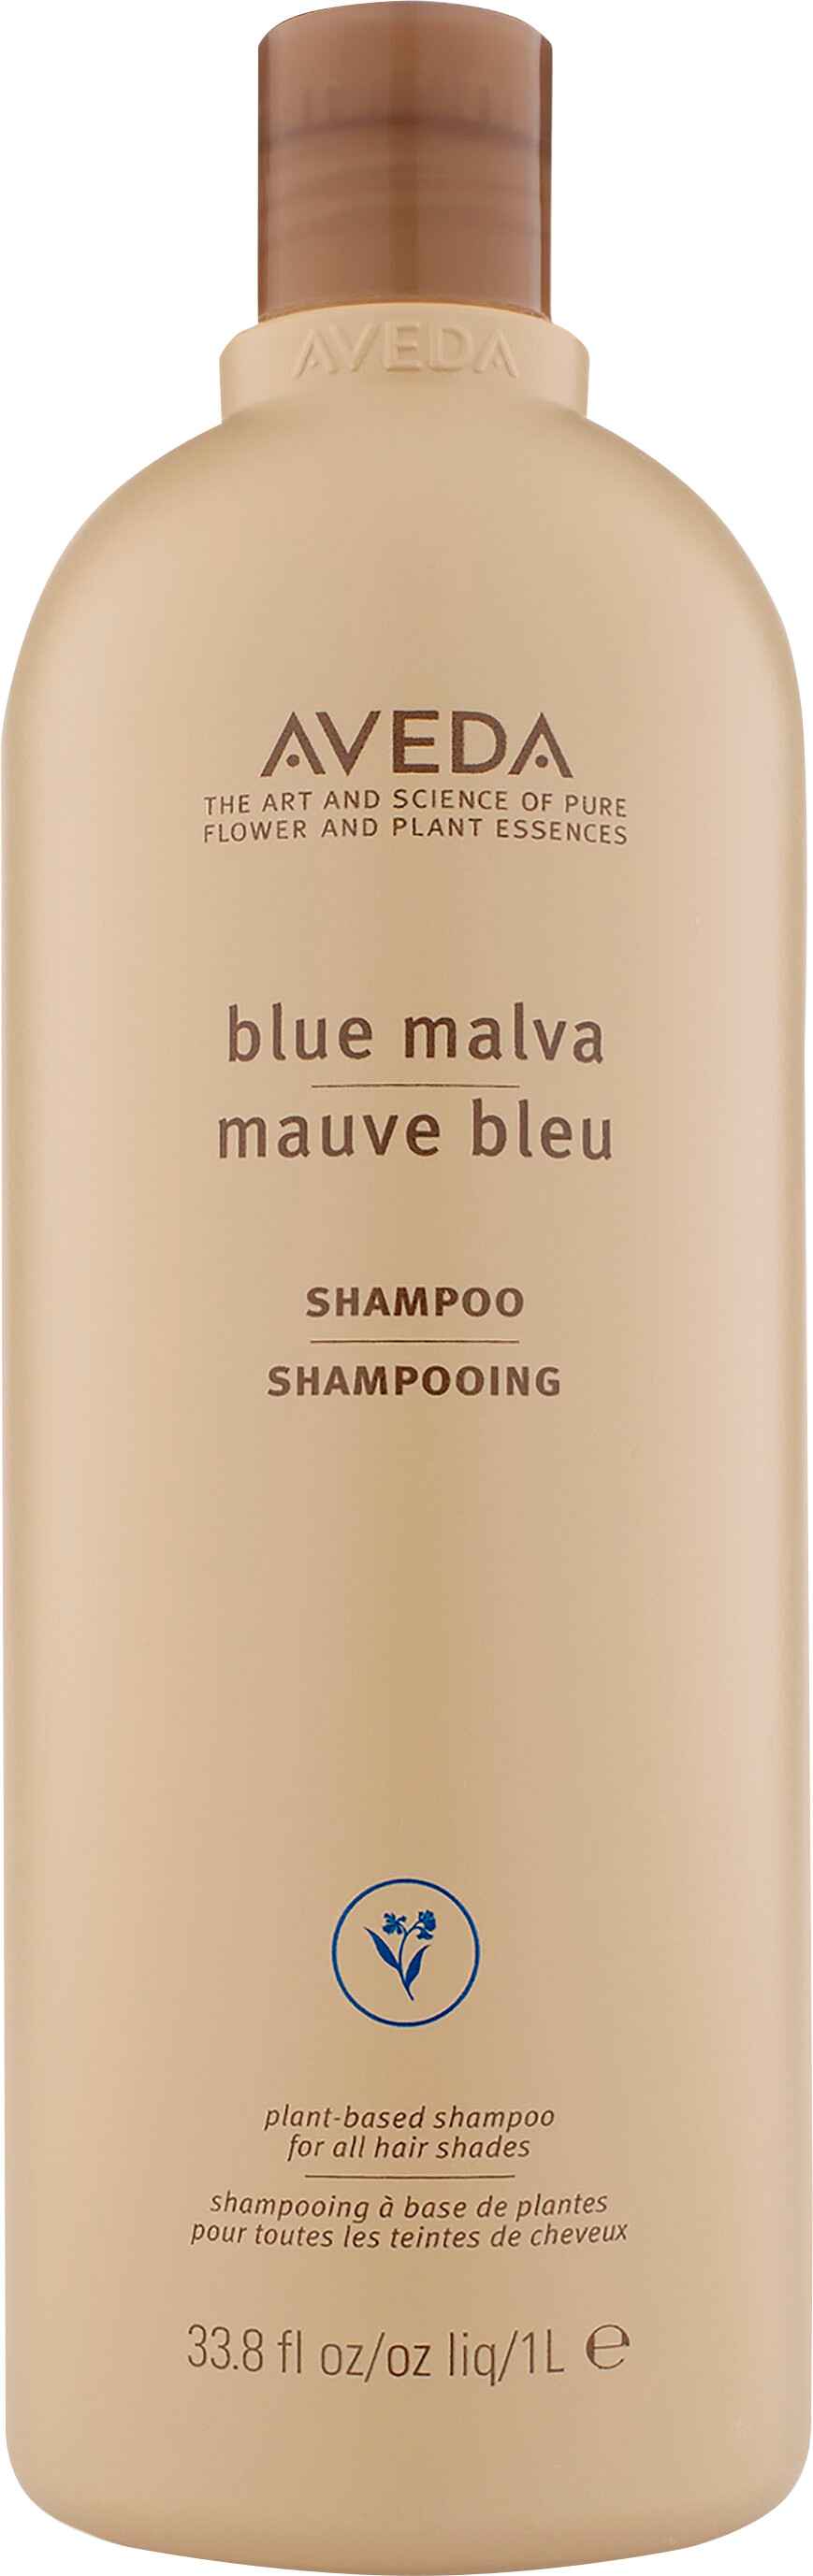 Aveda Blue Malva Shampoo 1 litre